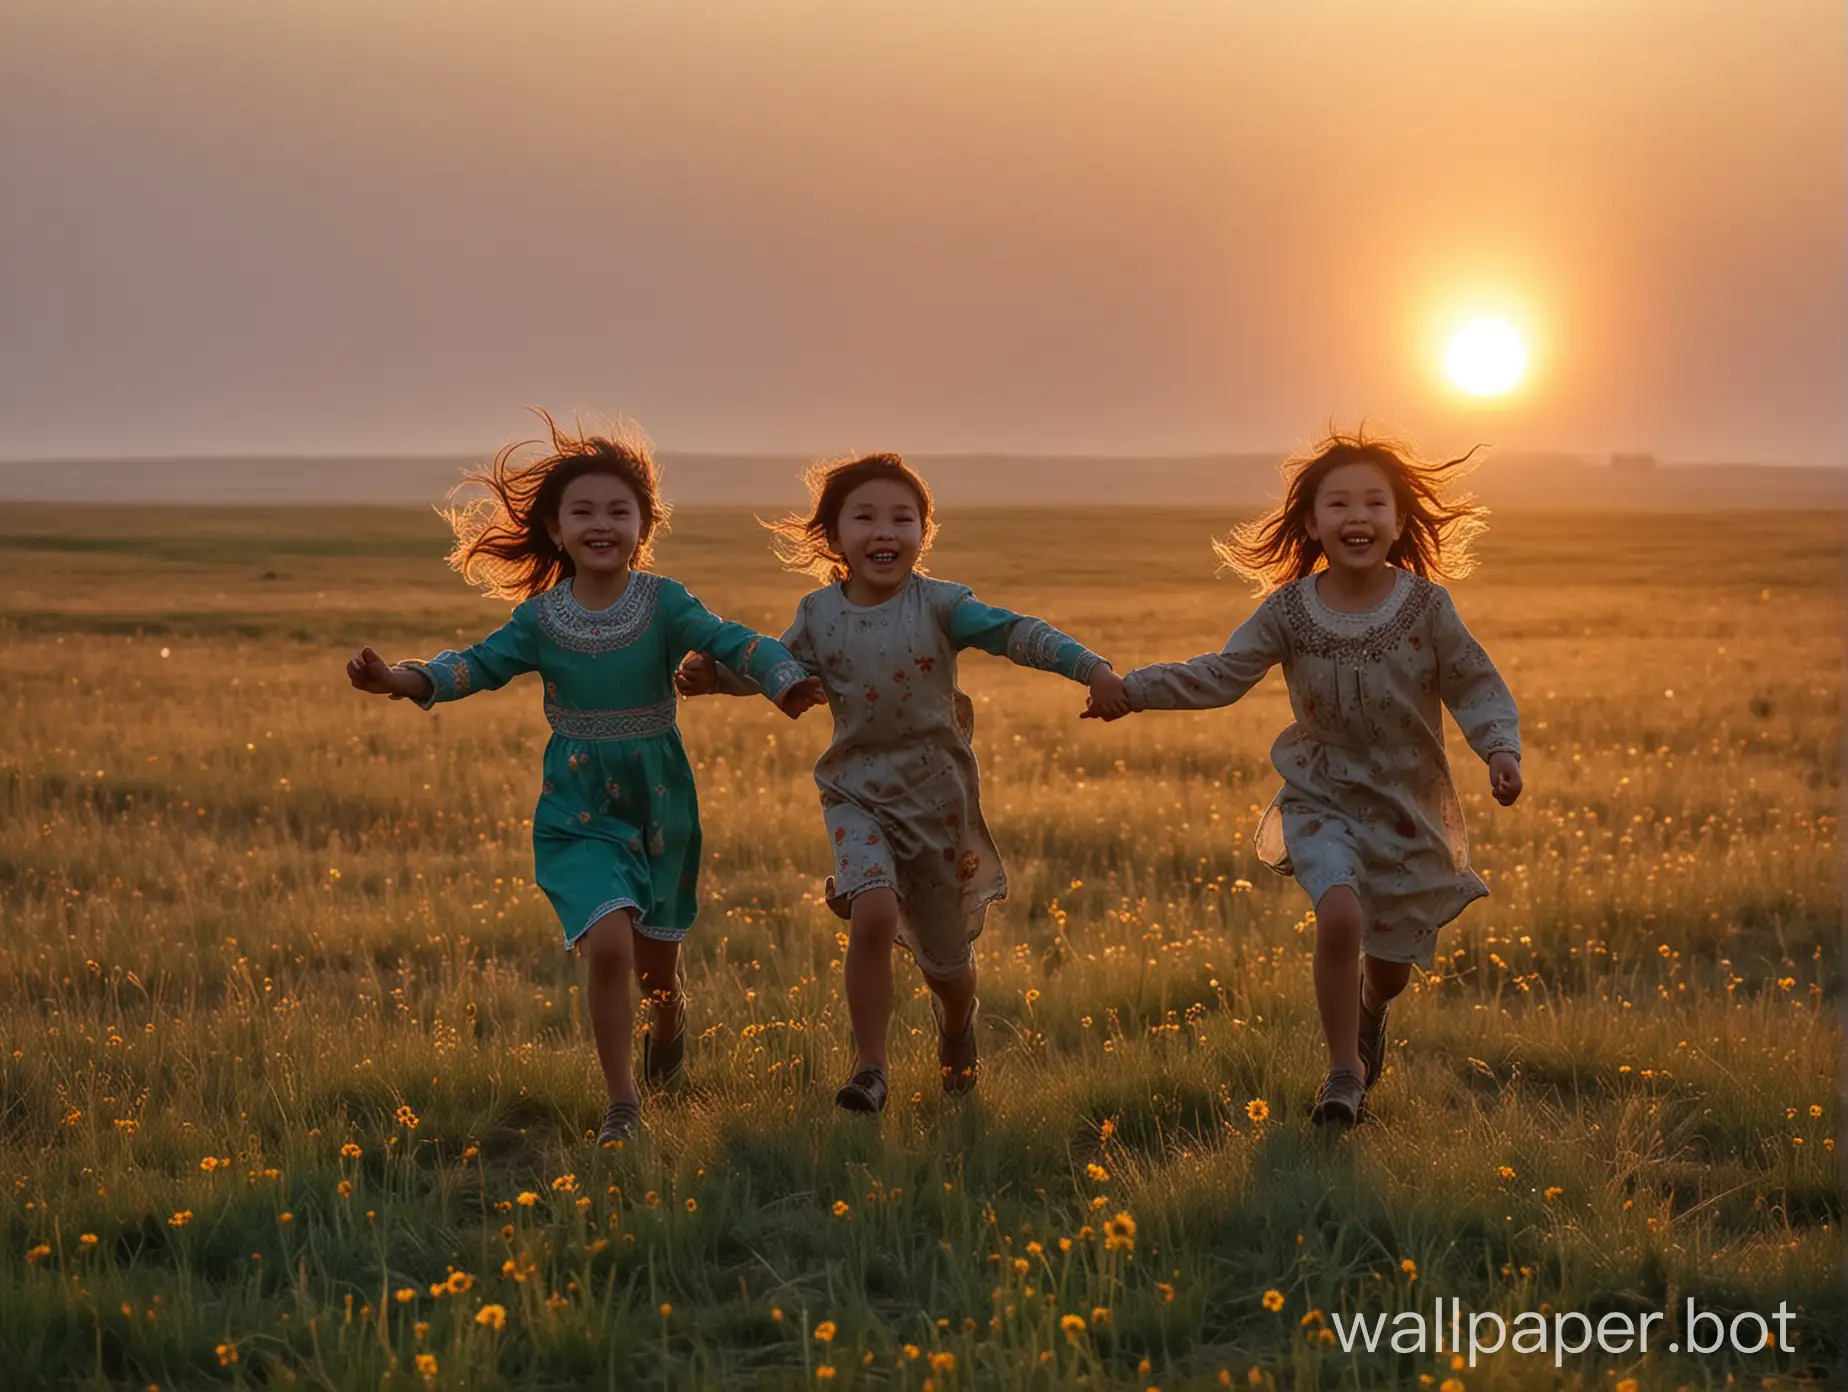 Kazakh-Children-Running-to-Greet-the-Evening-Sun-in-Joyous-Field-Adventure